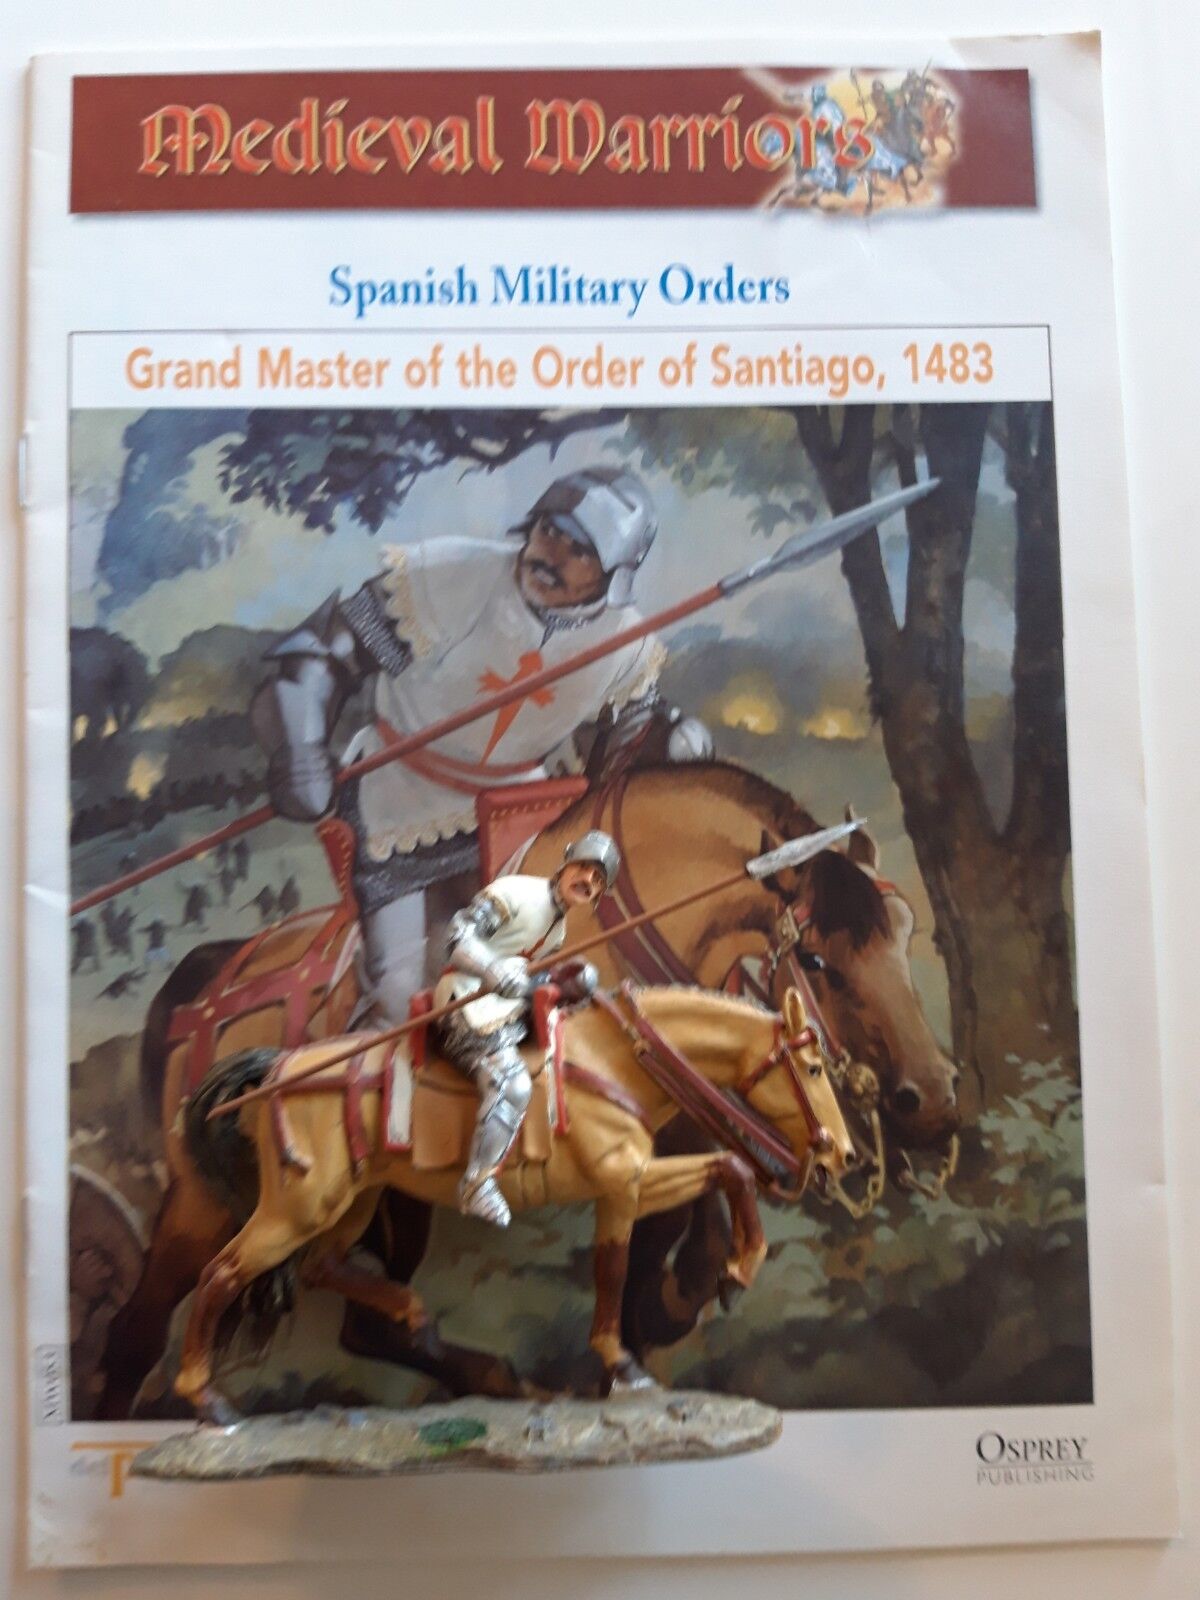 Del prado medieval warriors knight spain santiago 15th cent. 1:30 cavalry 53